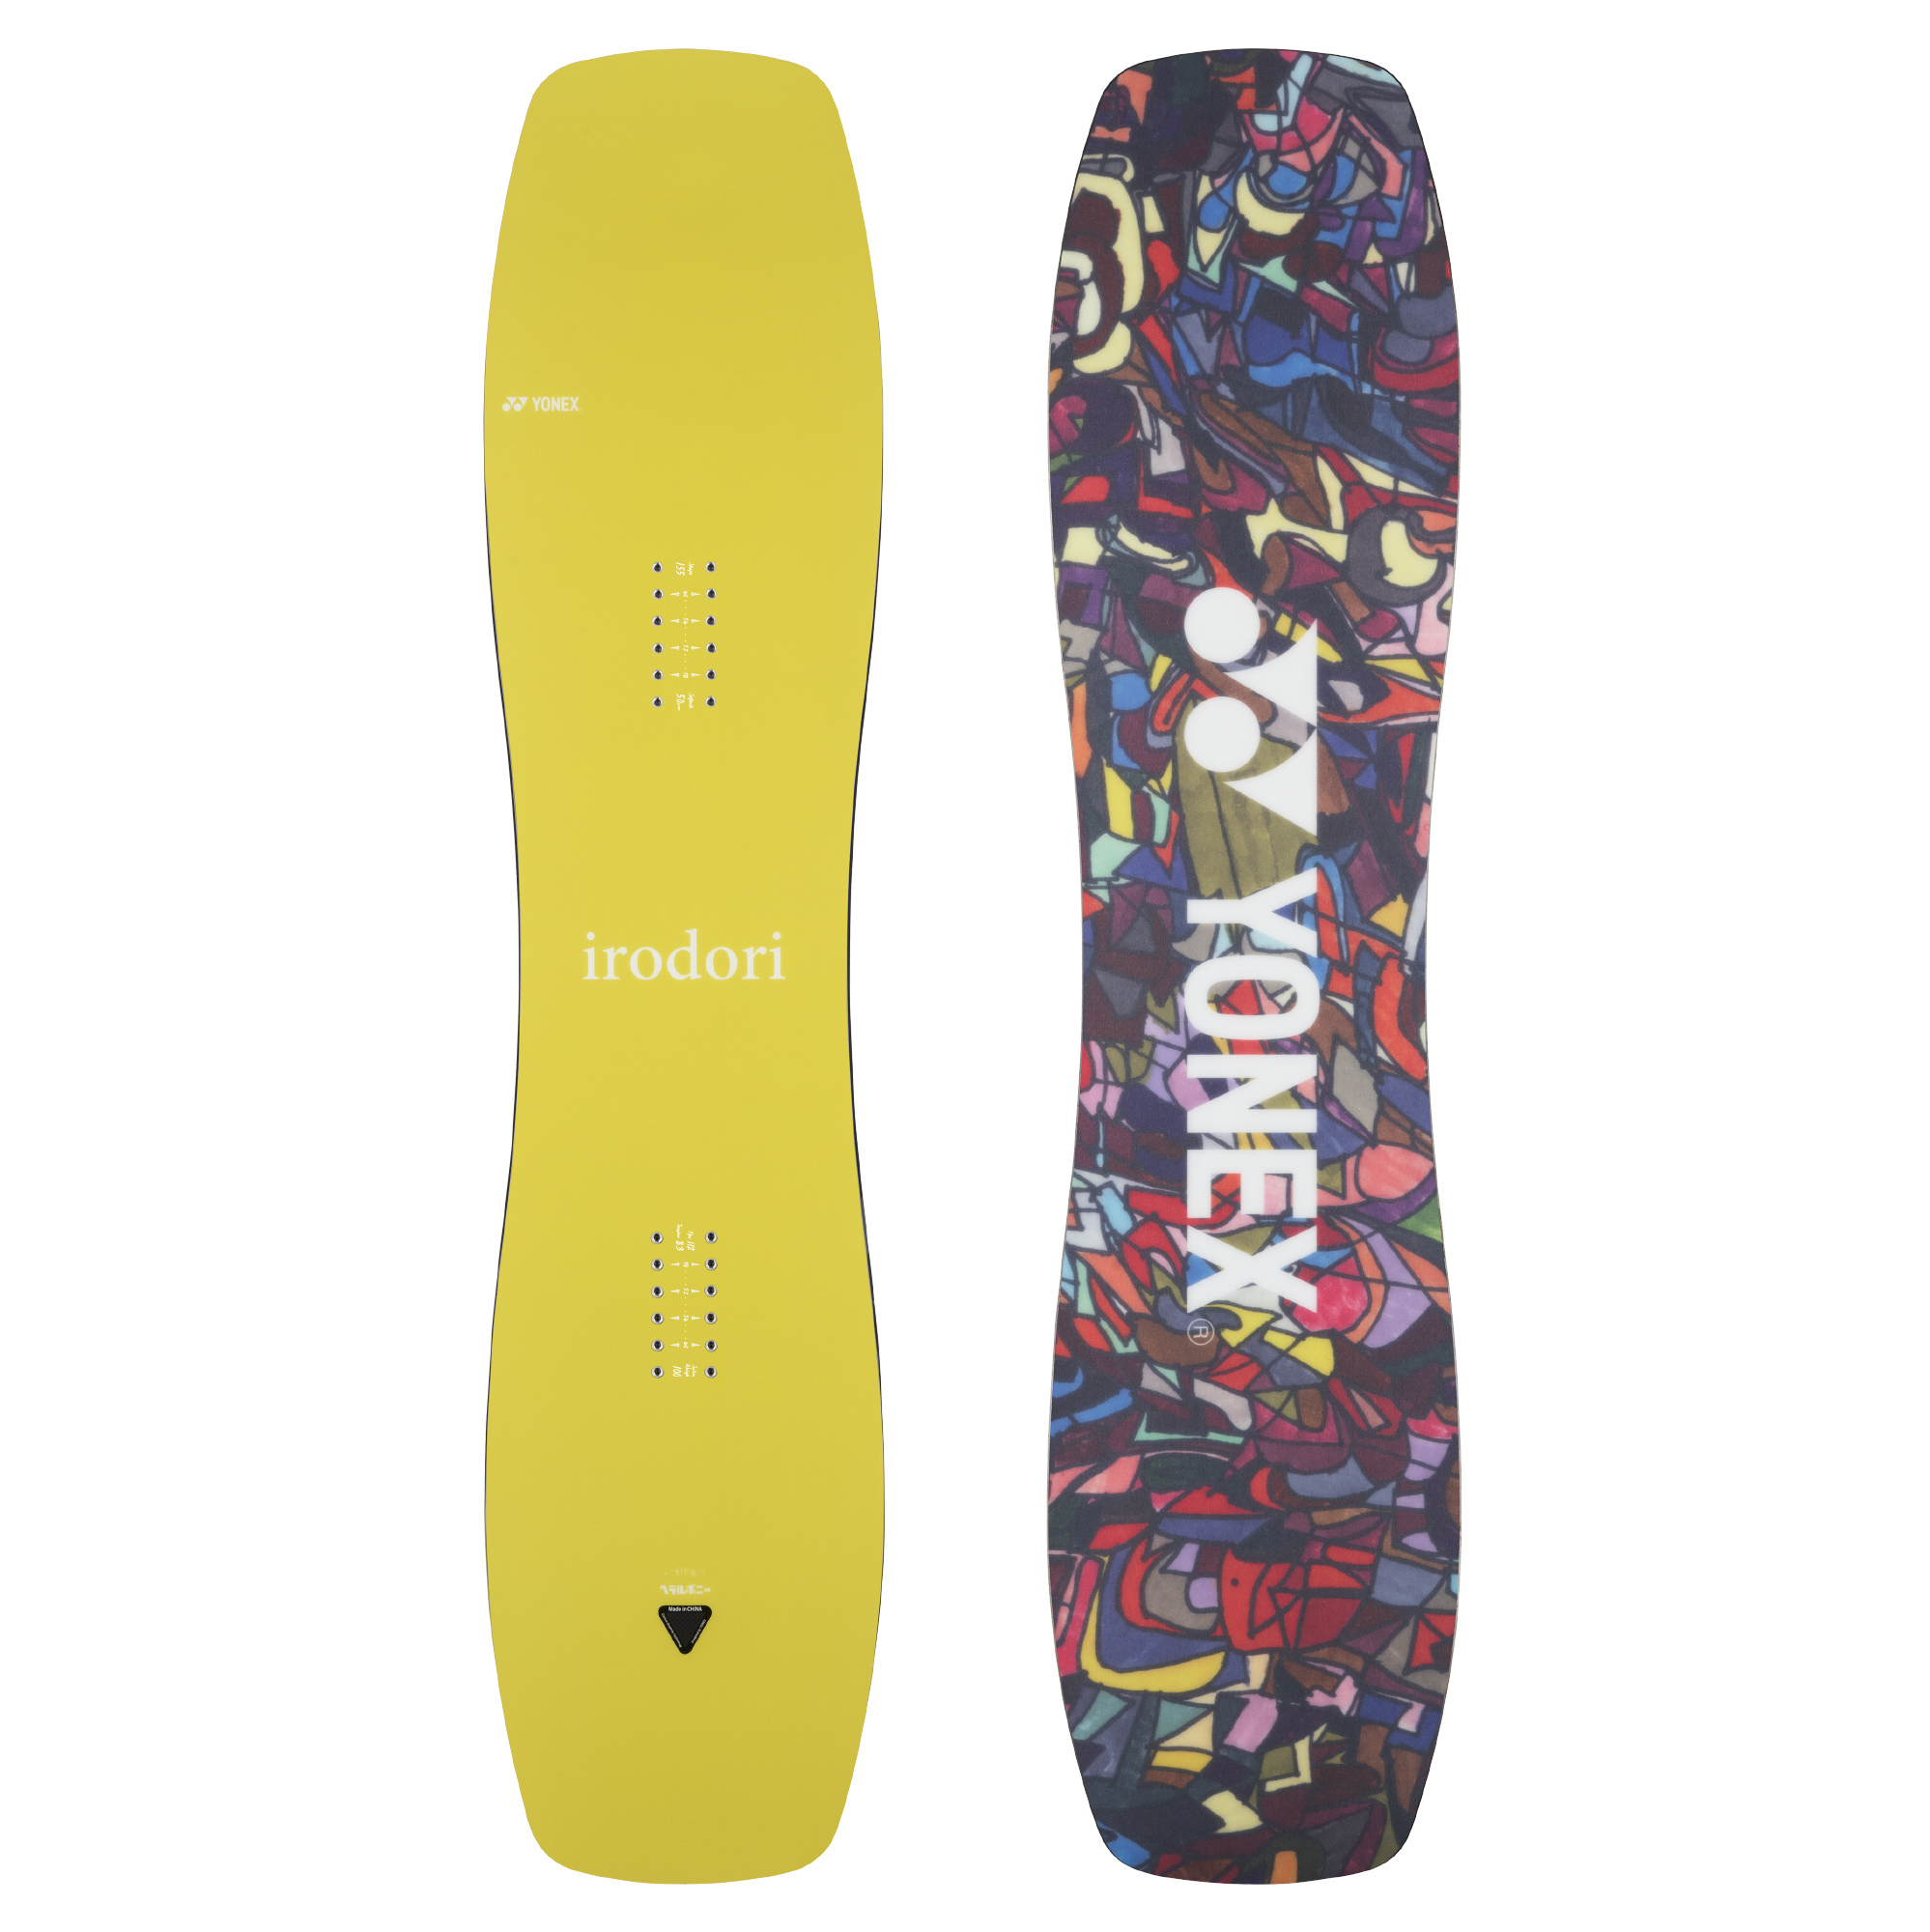 snowboard yonex irodori - スノーボード